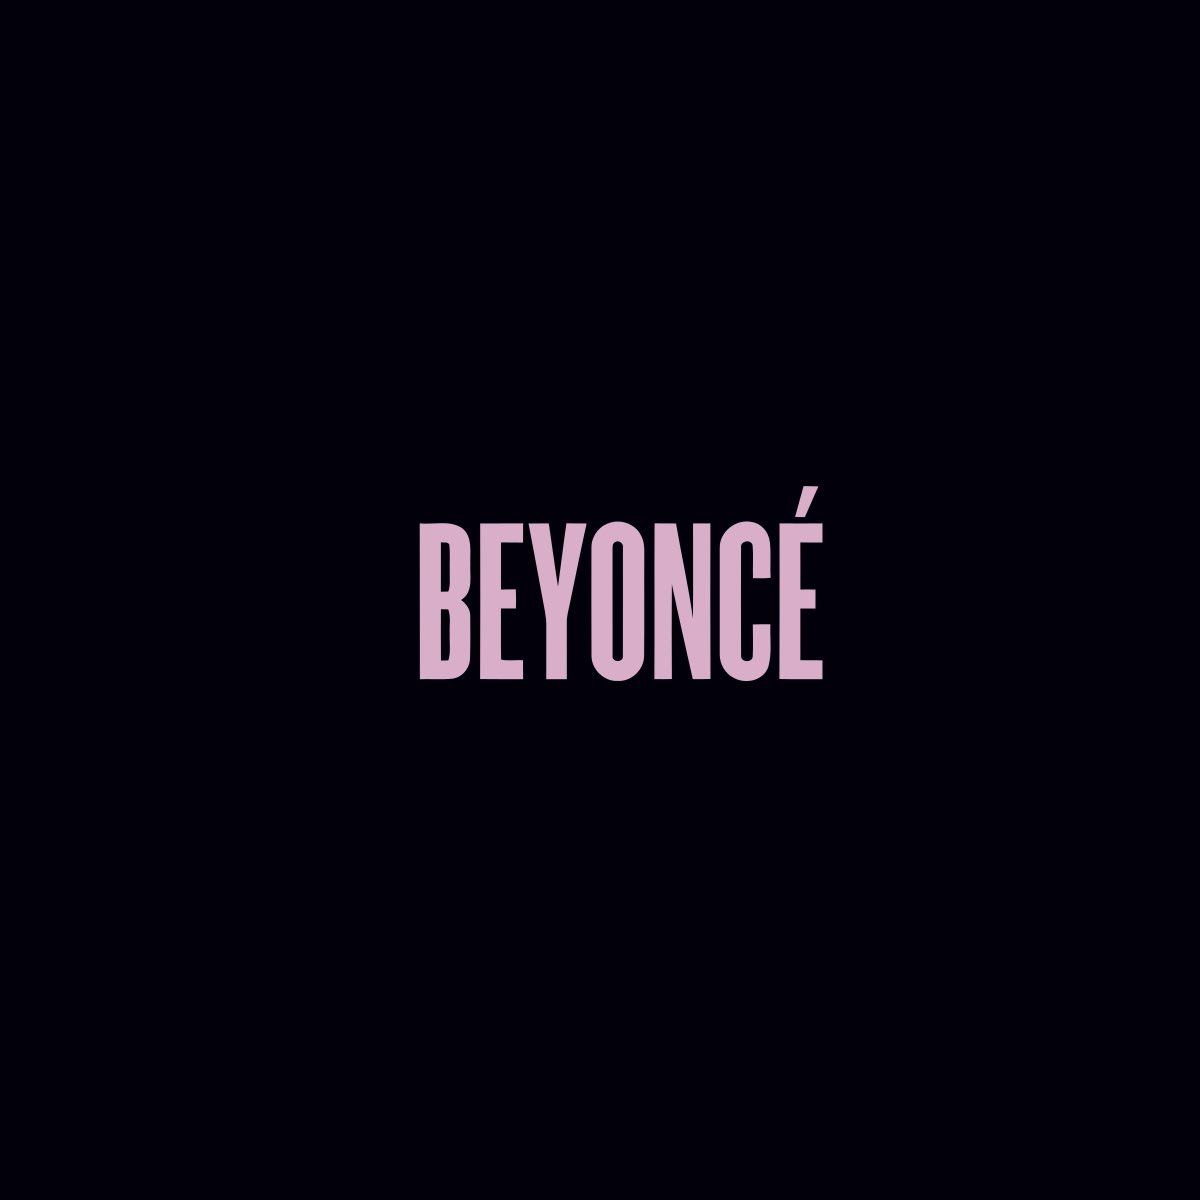 What if Beyoncé drops a new album?